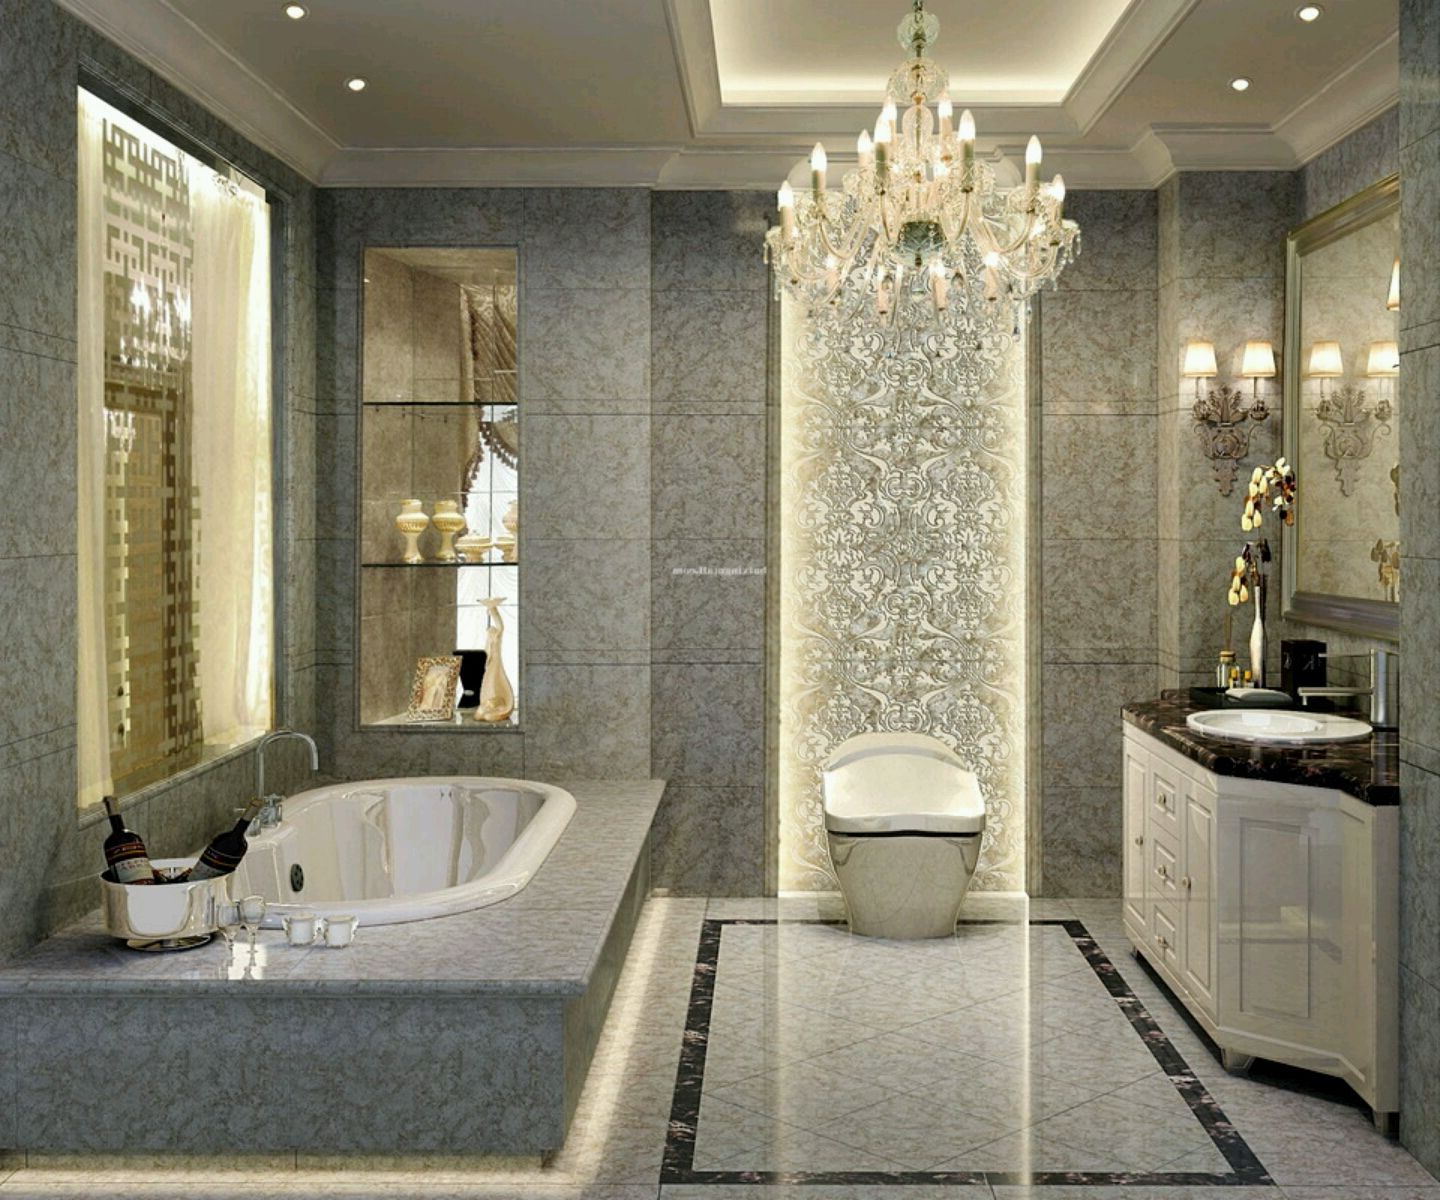 Bathroom Interior Design Photos Showing Lovely Designs